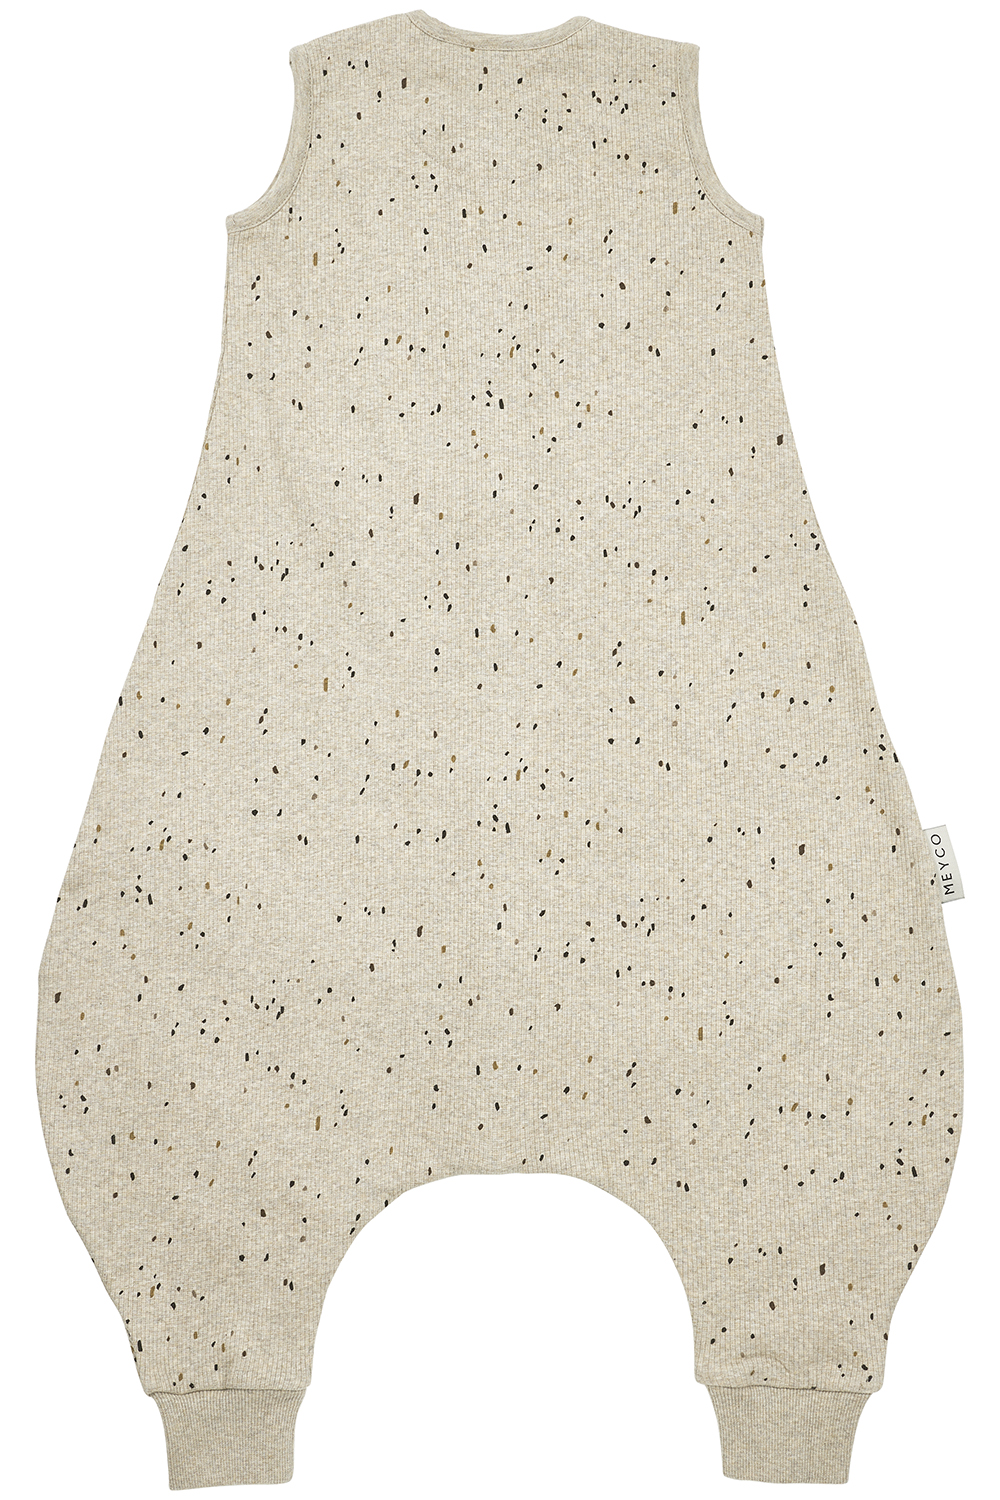 Baby zomer slaapoverall jumper Rib Mini Spot - sand melange - 92cm